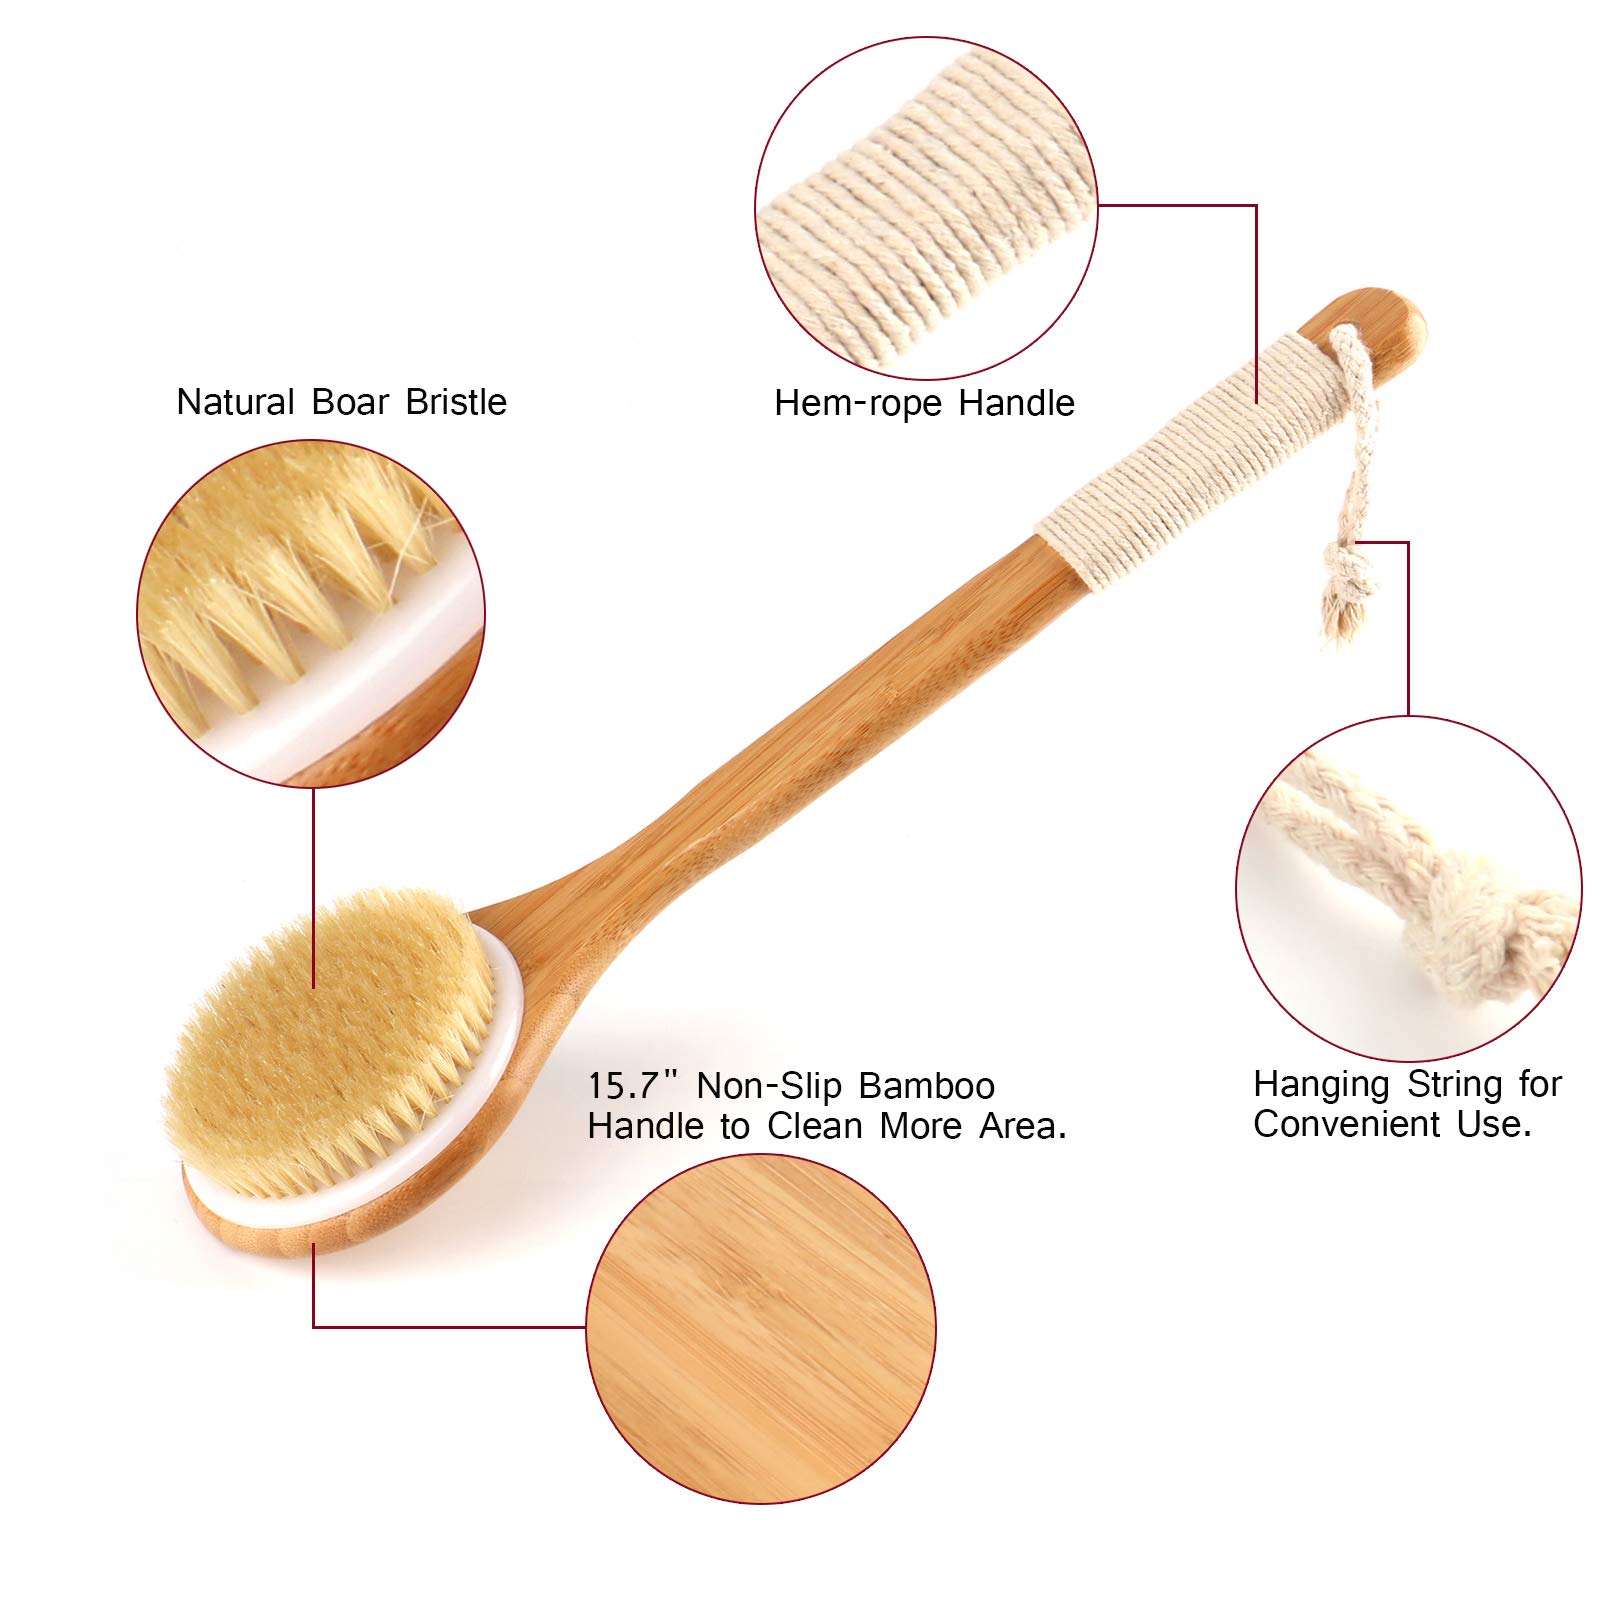 Bath Body Brush Set for Wet or Dry Brushing - Natural Detoxifying Facial Brush & Long Handle Body Brush - Exfoliating Dry Skin, Stimulate Blood Circulation - Set of 3